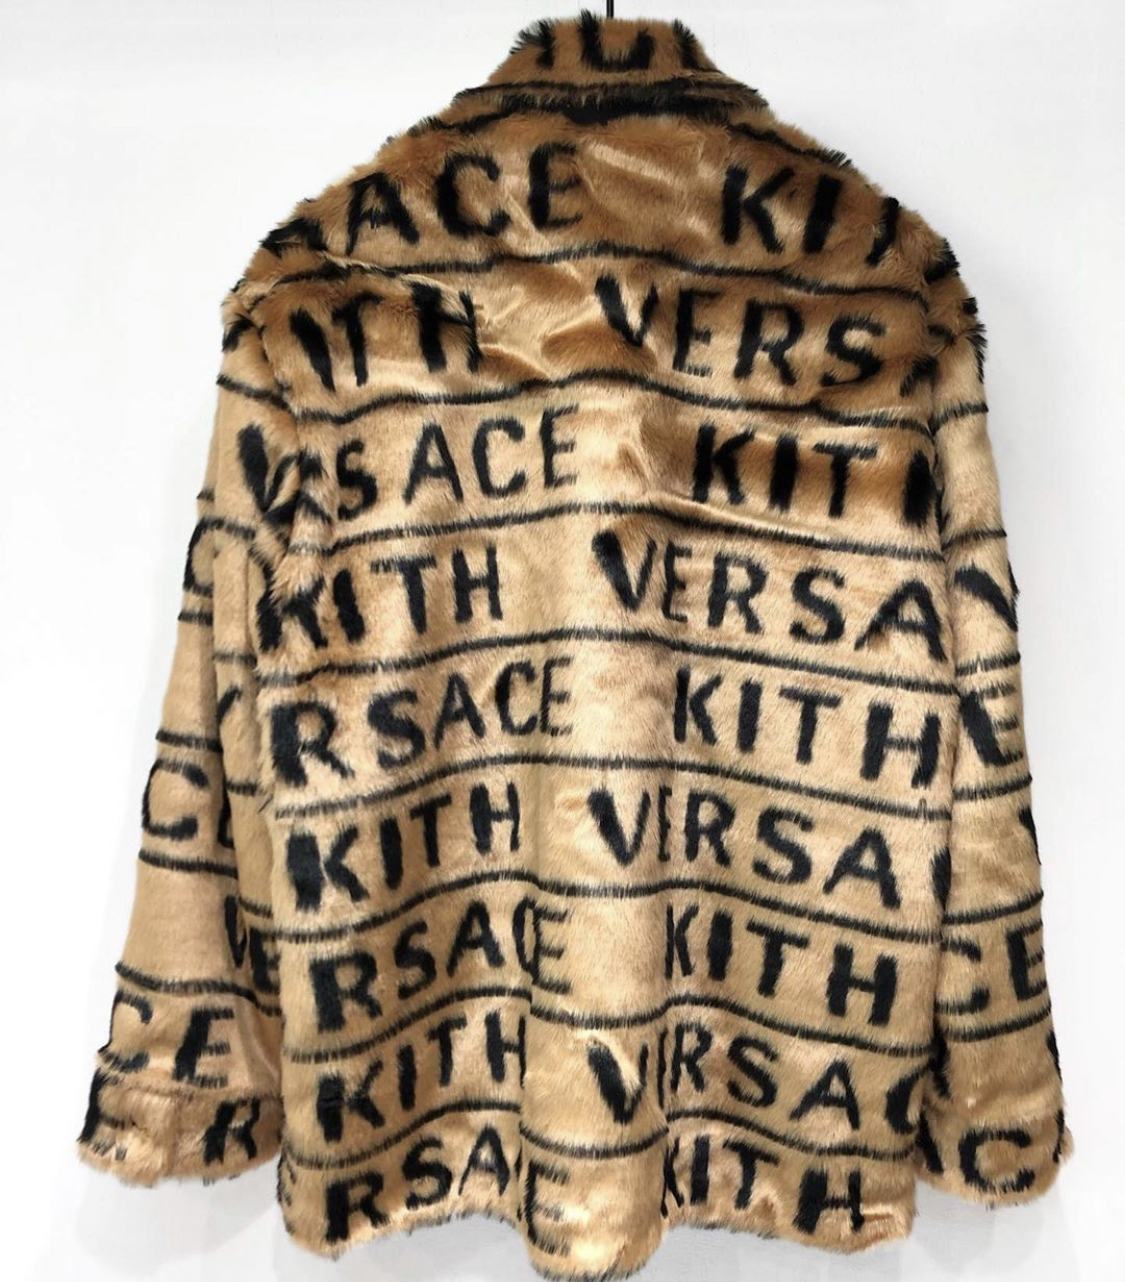 versace kith jacket